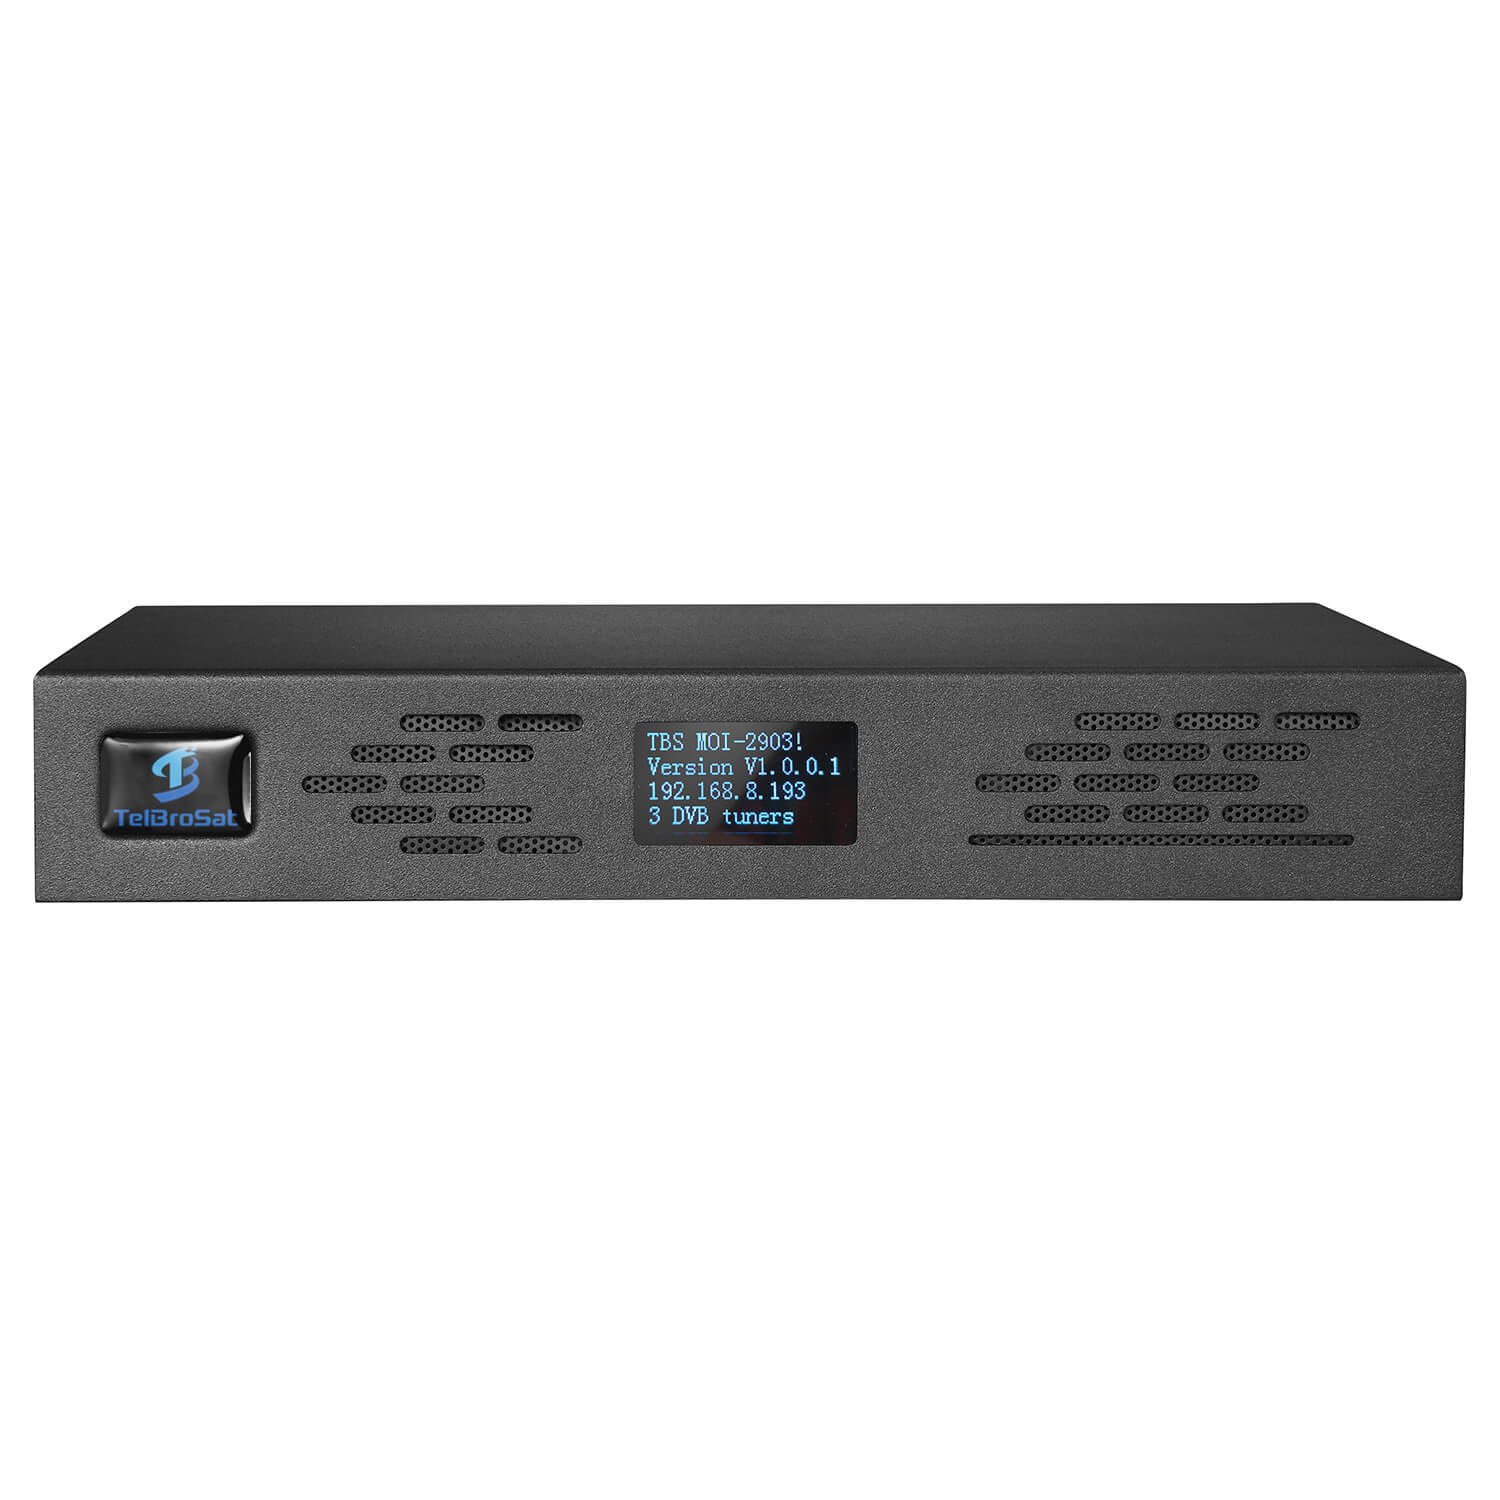 TBS2903 MOI Plus DVB to IP Gateway Box